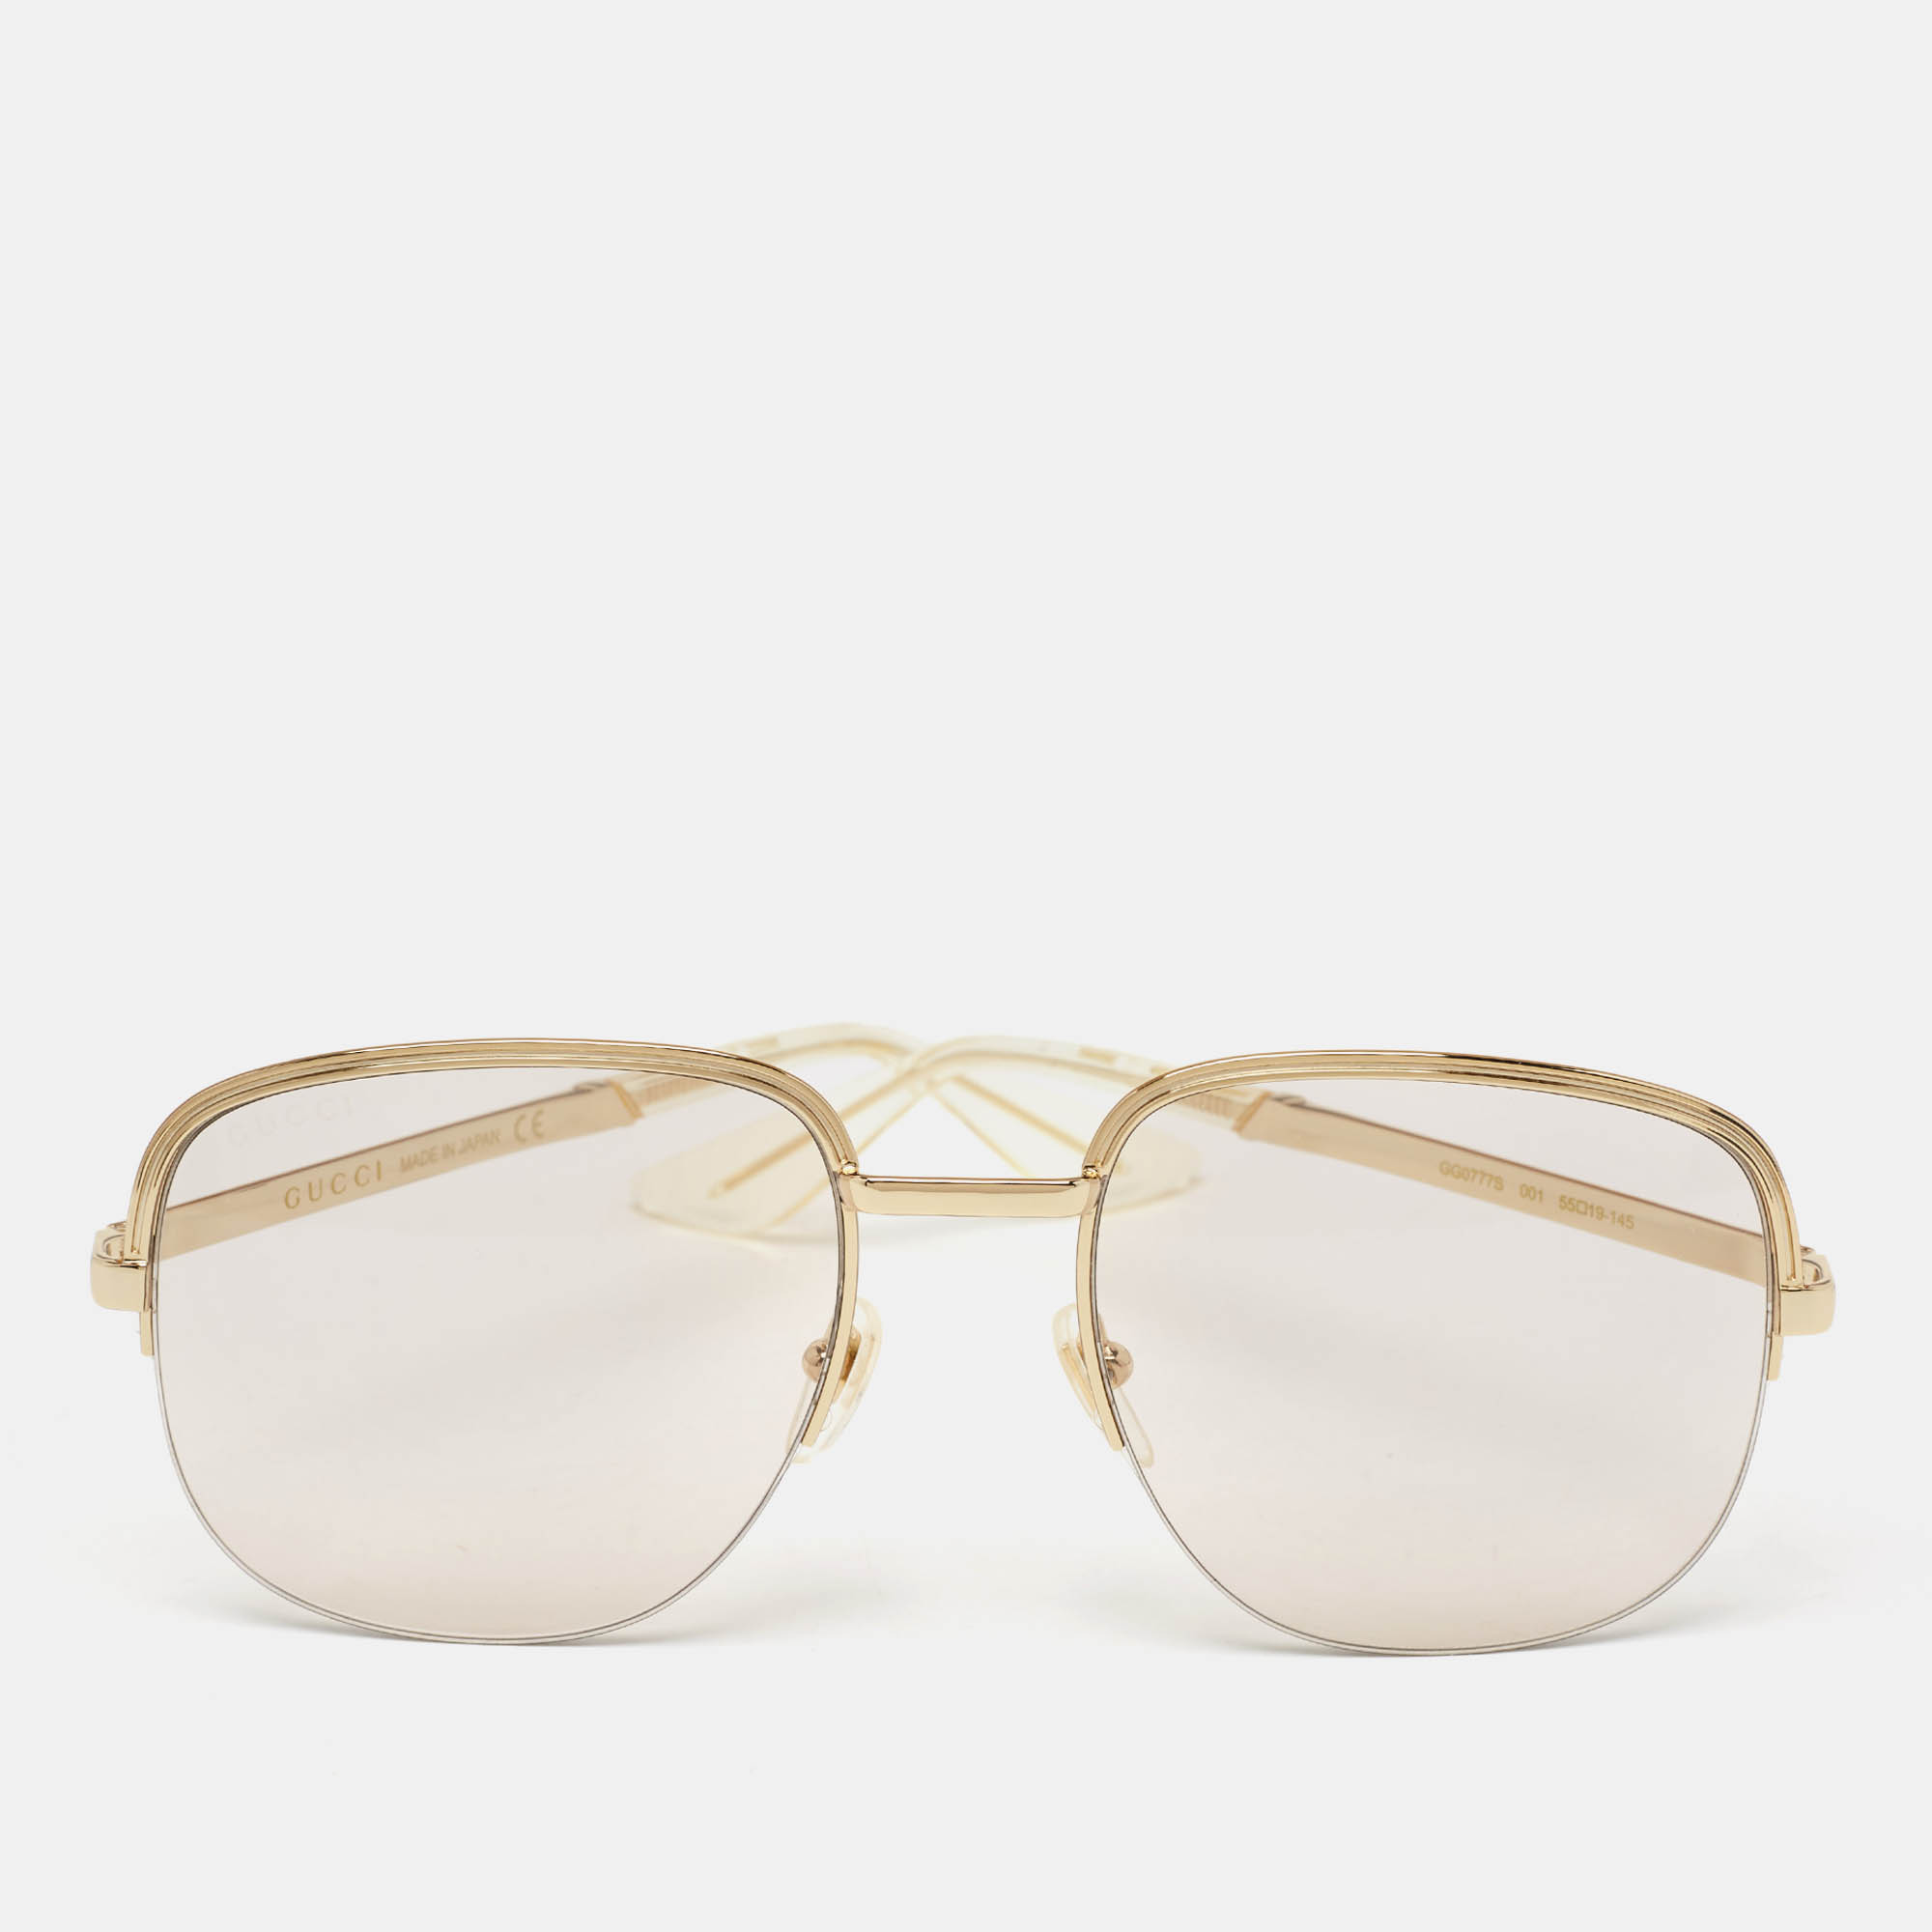 Gucci gold tone frame gg0777s aviators sunglasses